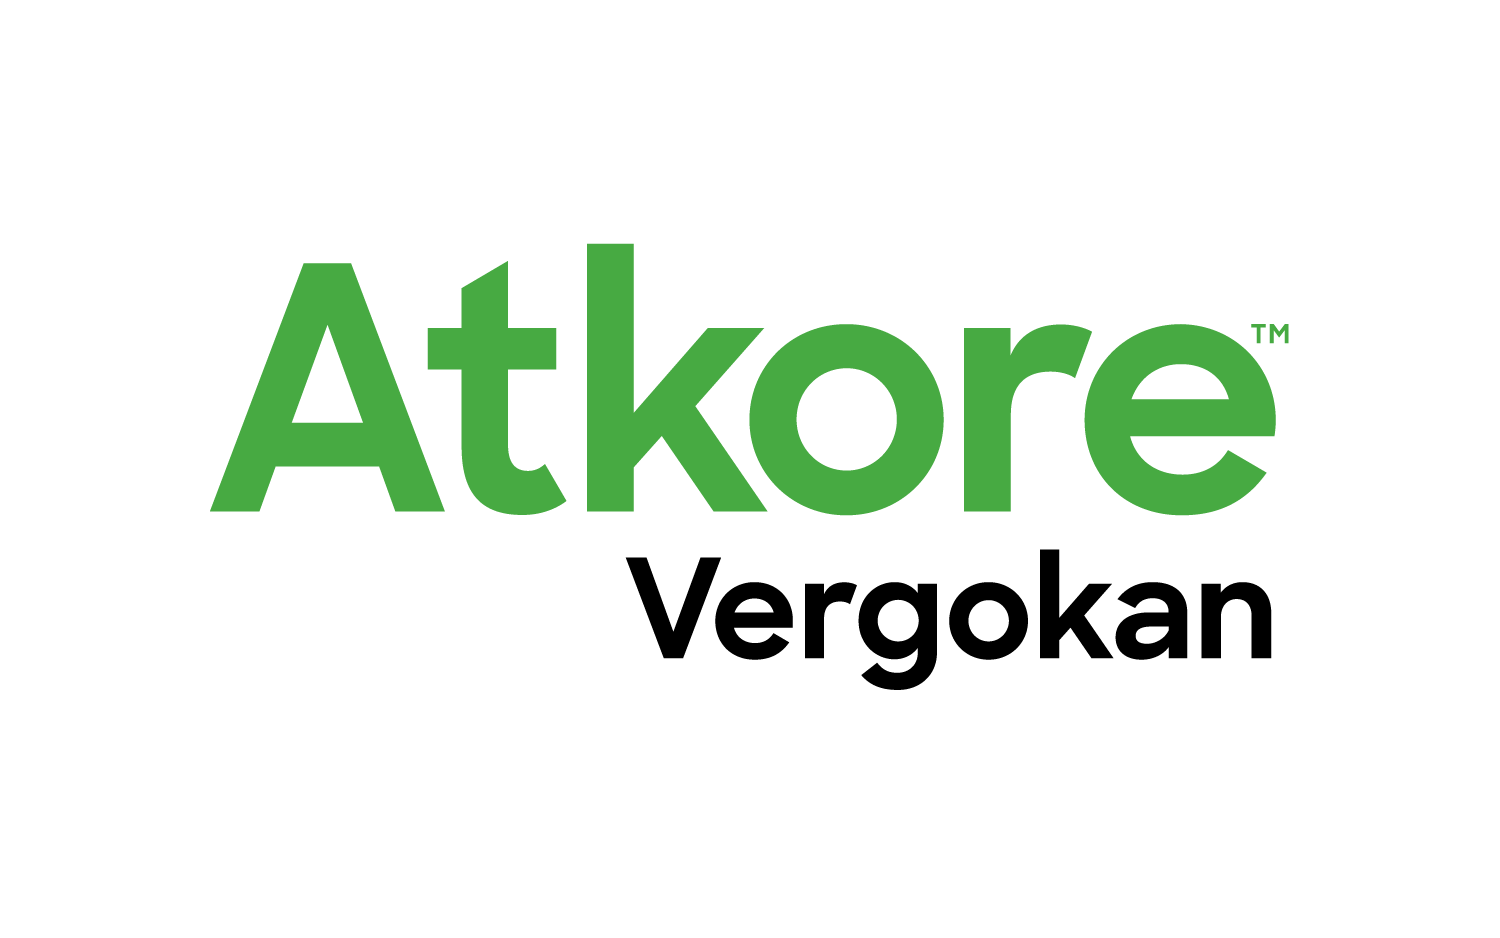 ATK-24194_Brand_Logo_SubBrand_Vergokan_RGB_Color.png